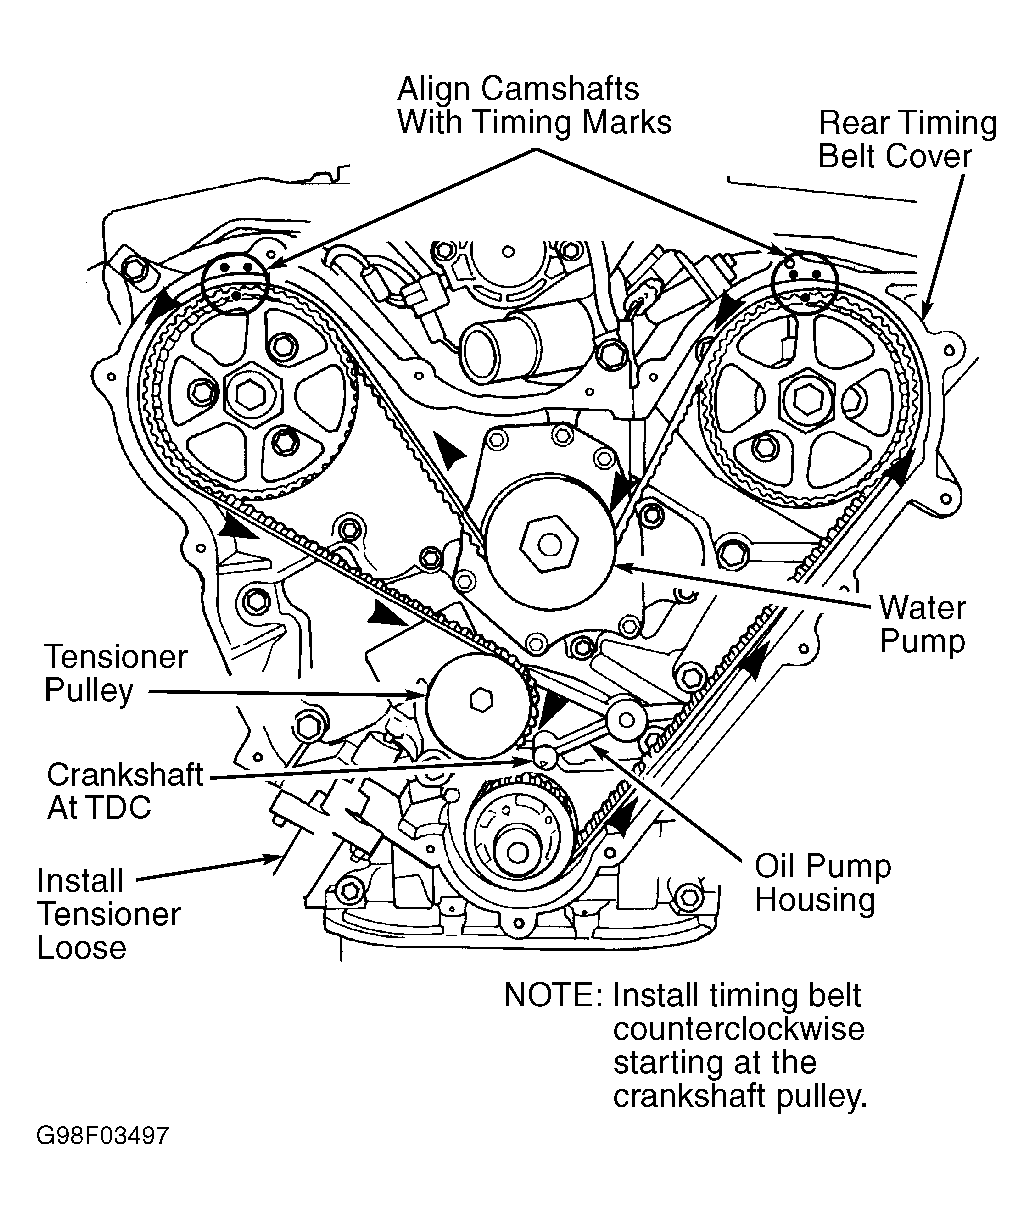 Dayco Alternator Power Steering Serpentine Belt for 1999-2004 Chrysler 300M xh